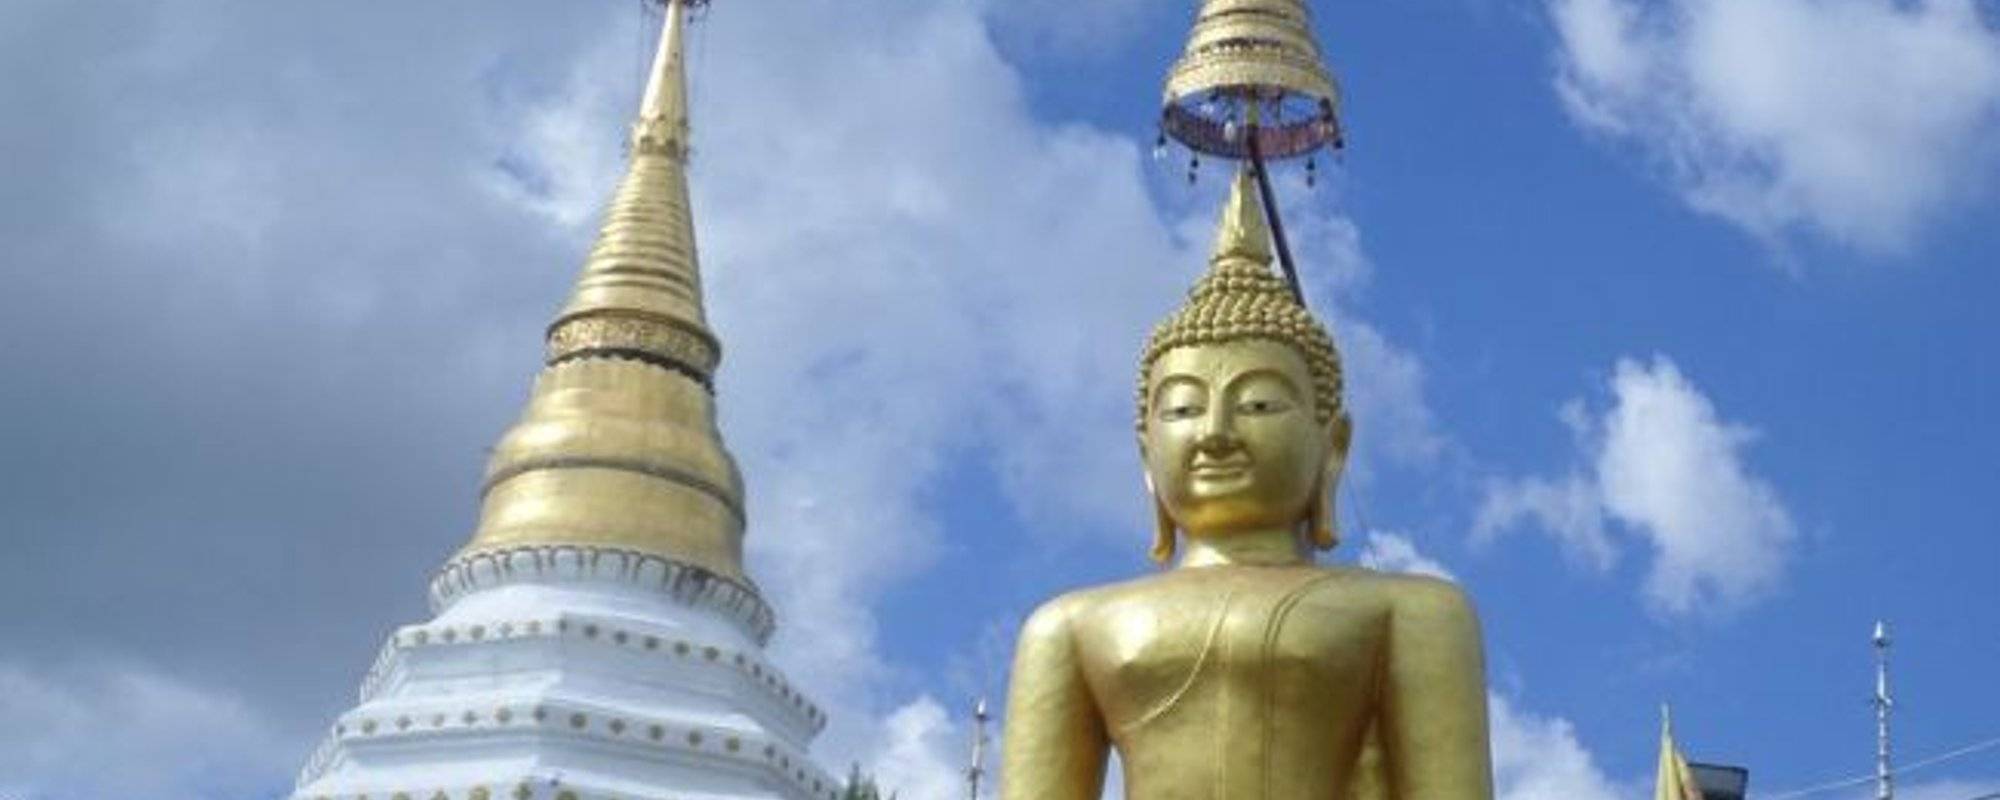 Travel Pro Report: Chiang Mai Thailand - Rating 9.6 - Travel Pro Author: @world-travel-pro